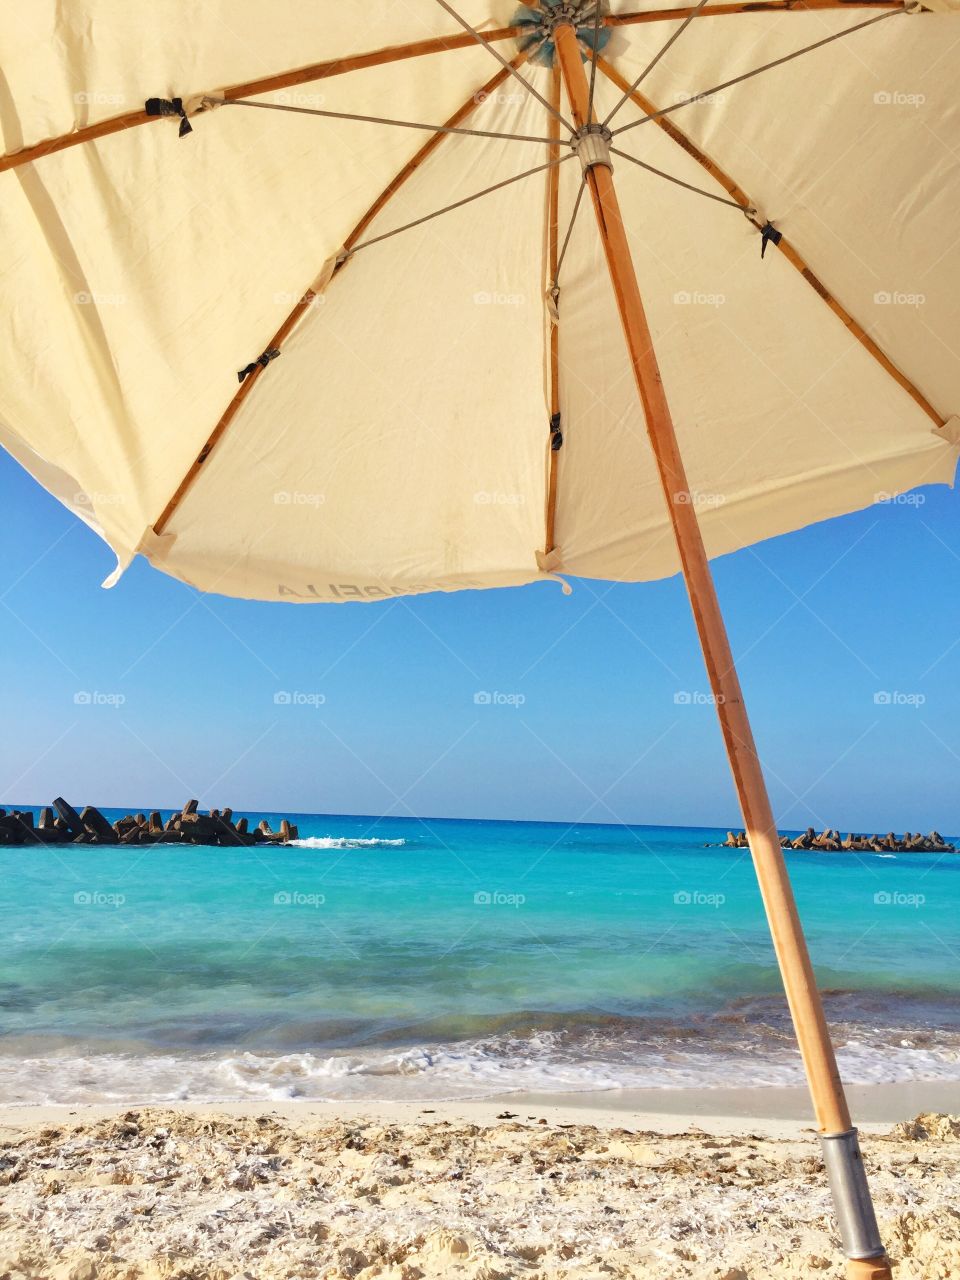 Umbrella on the Beach in Summer 